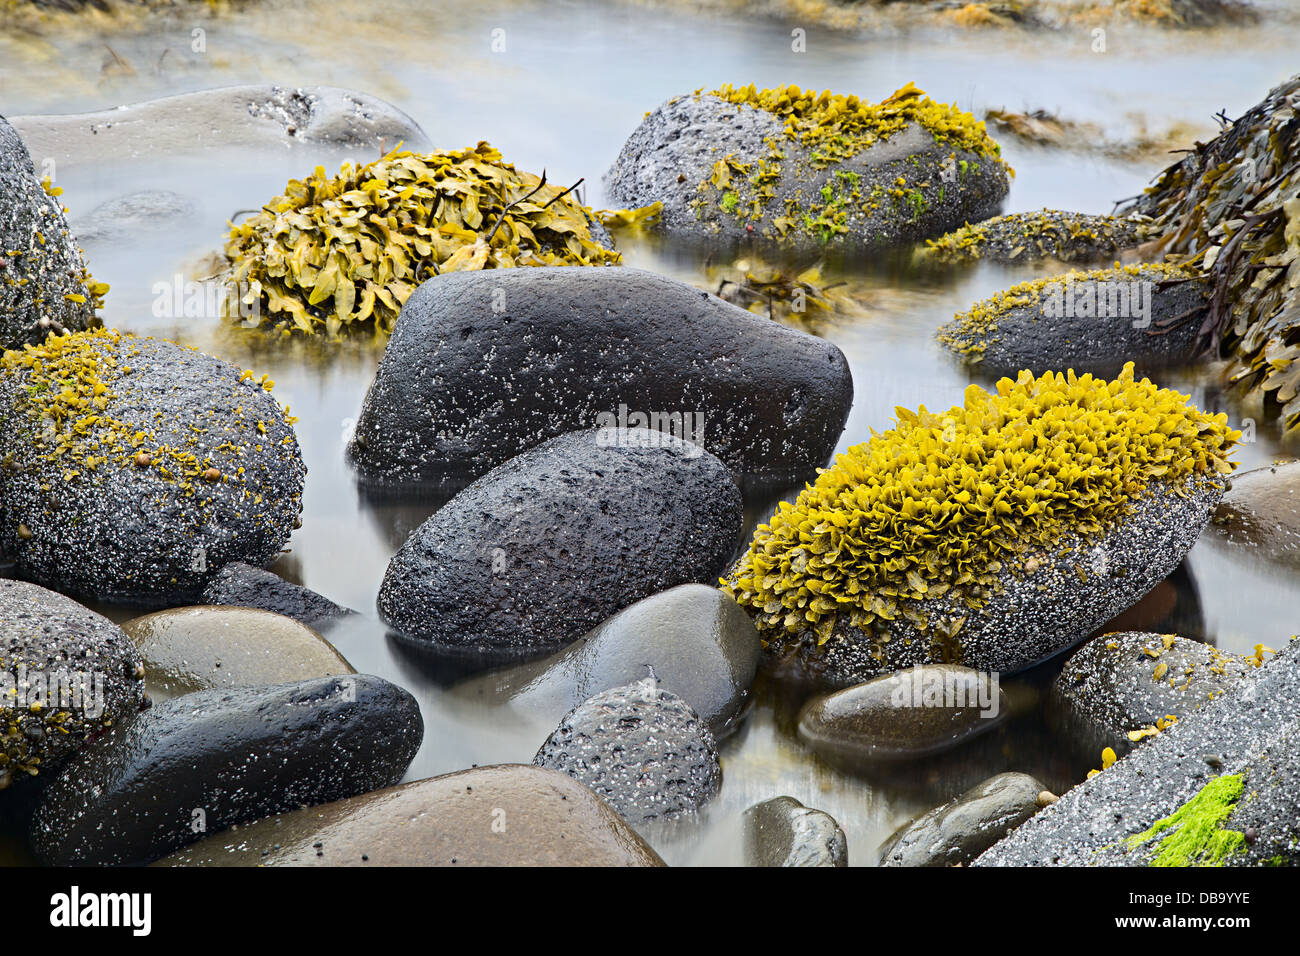 green algae or seaweed on boulders at rocky shore of wild coastline nature detail coast landscape background Stock Photo